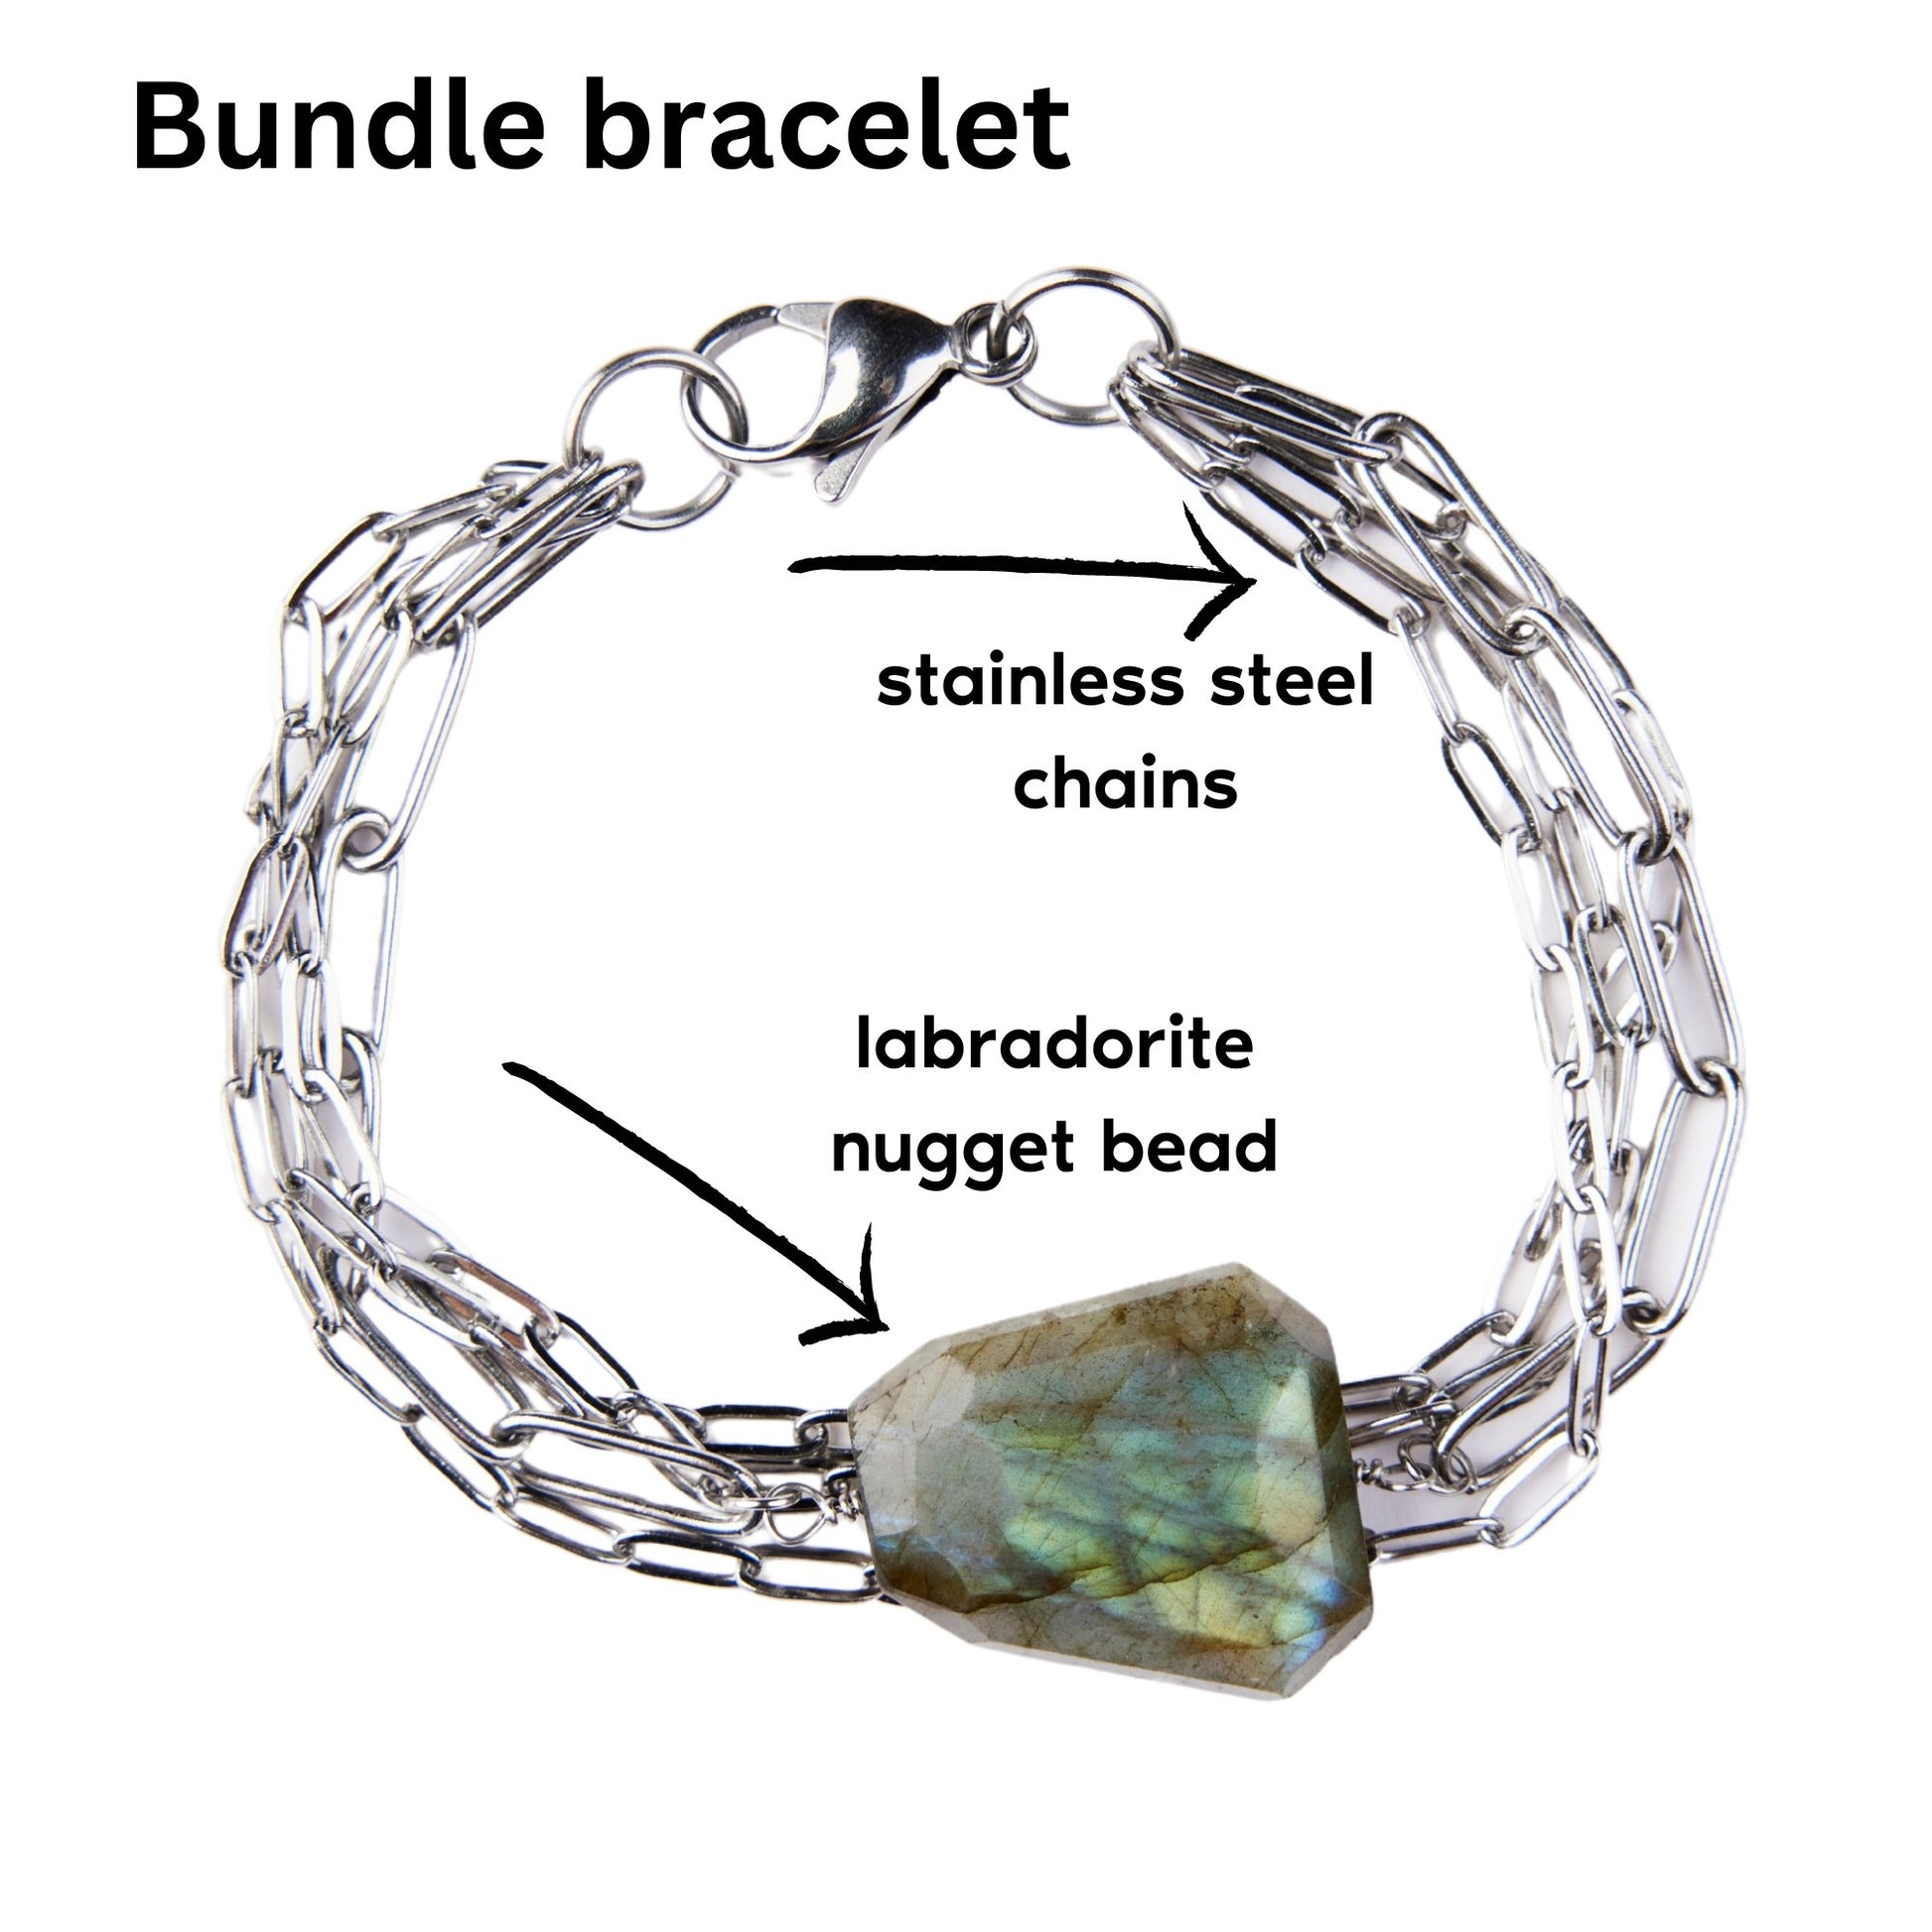 Chain Labradorite Bracelet - Steel Toe Studios